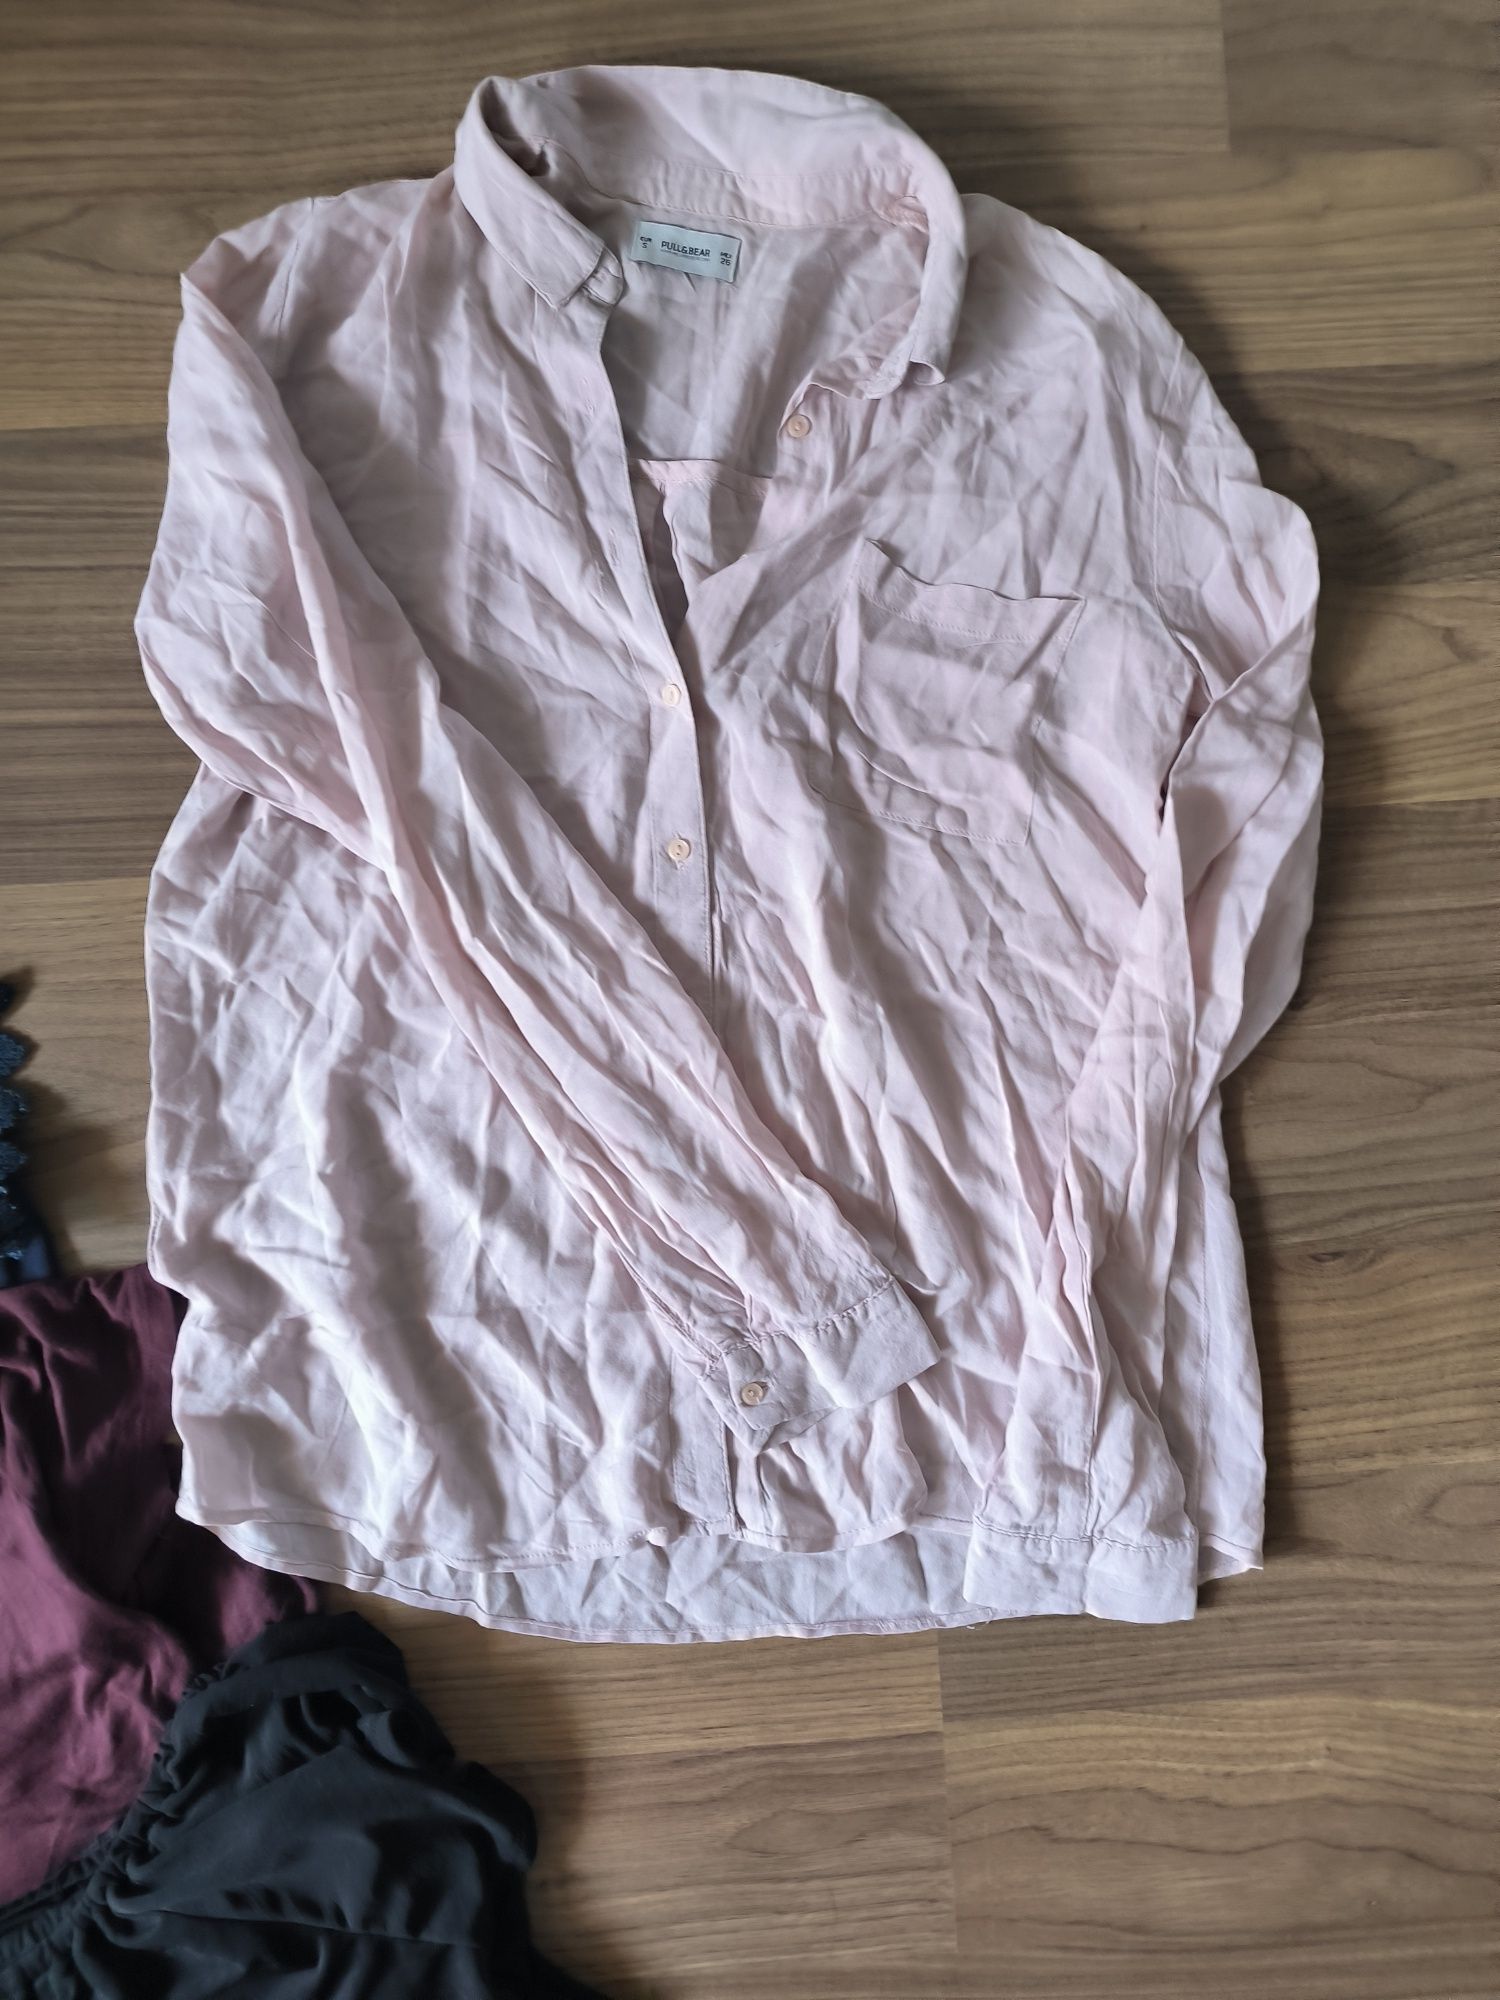 Zestaw ubrań mega paka sukienka koszula bluzka Reserved stradivarius